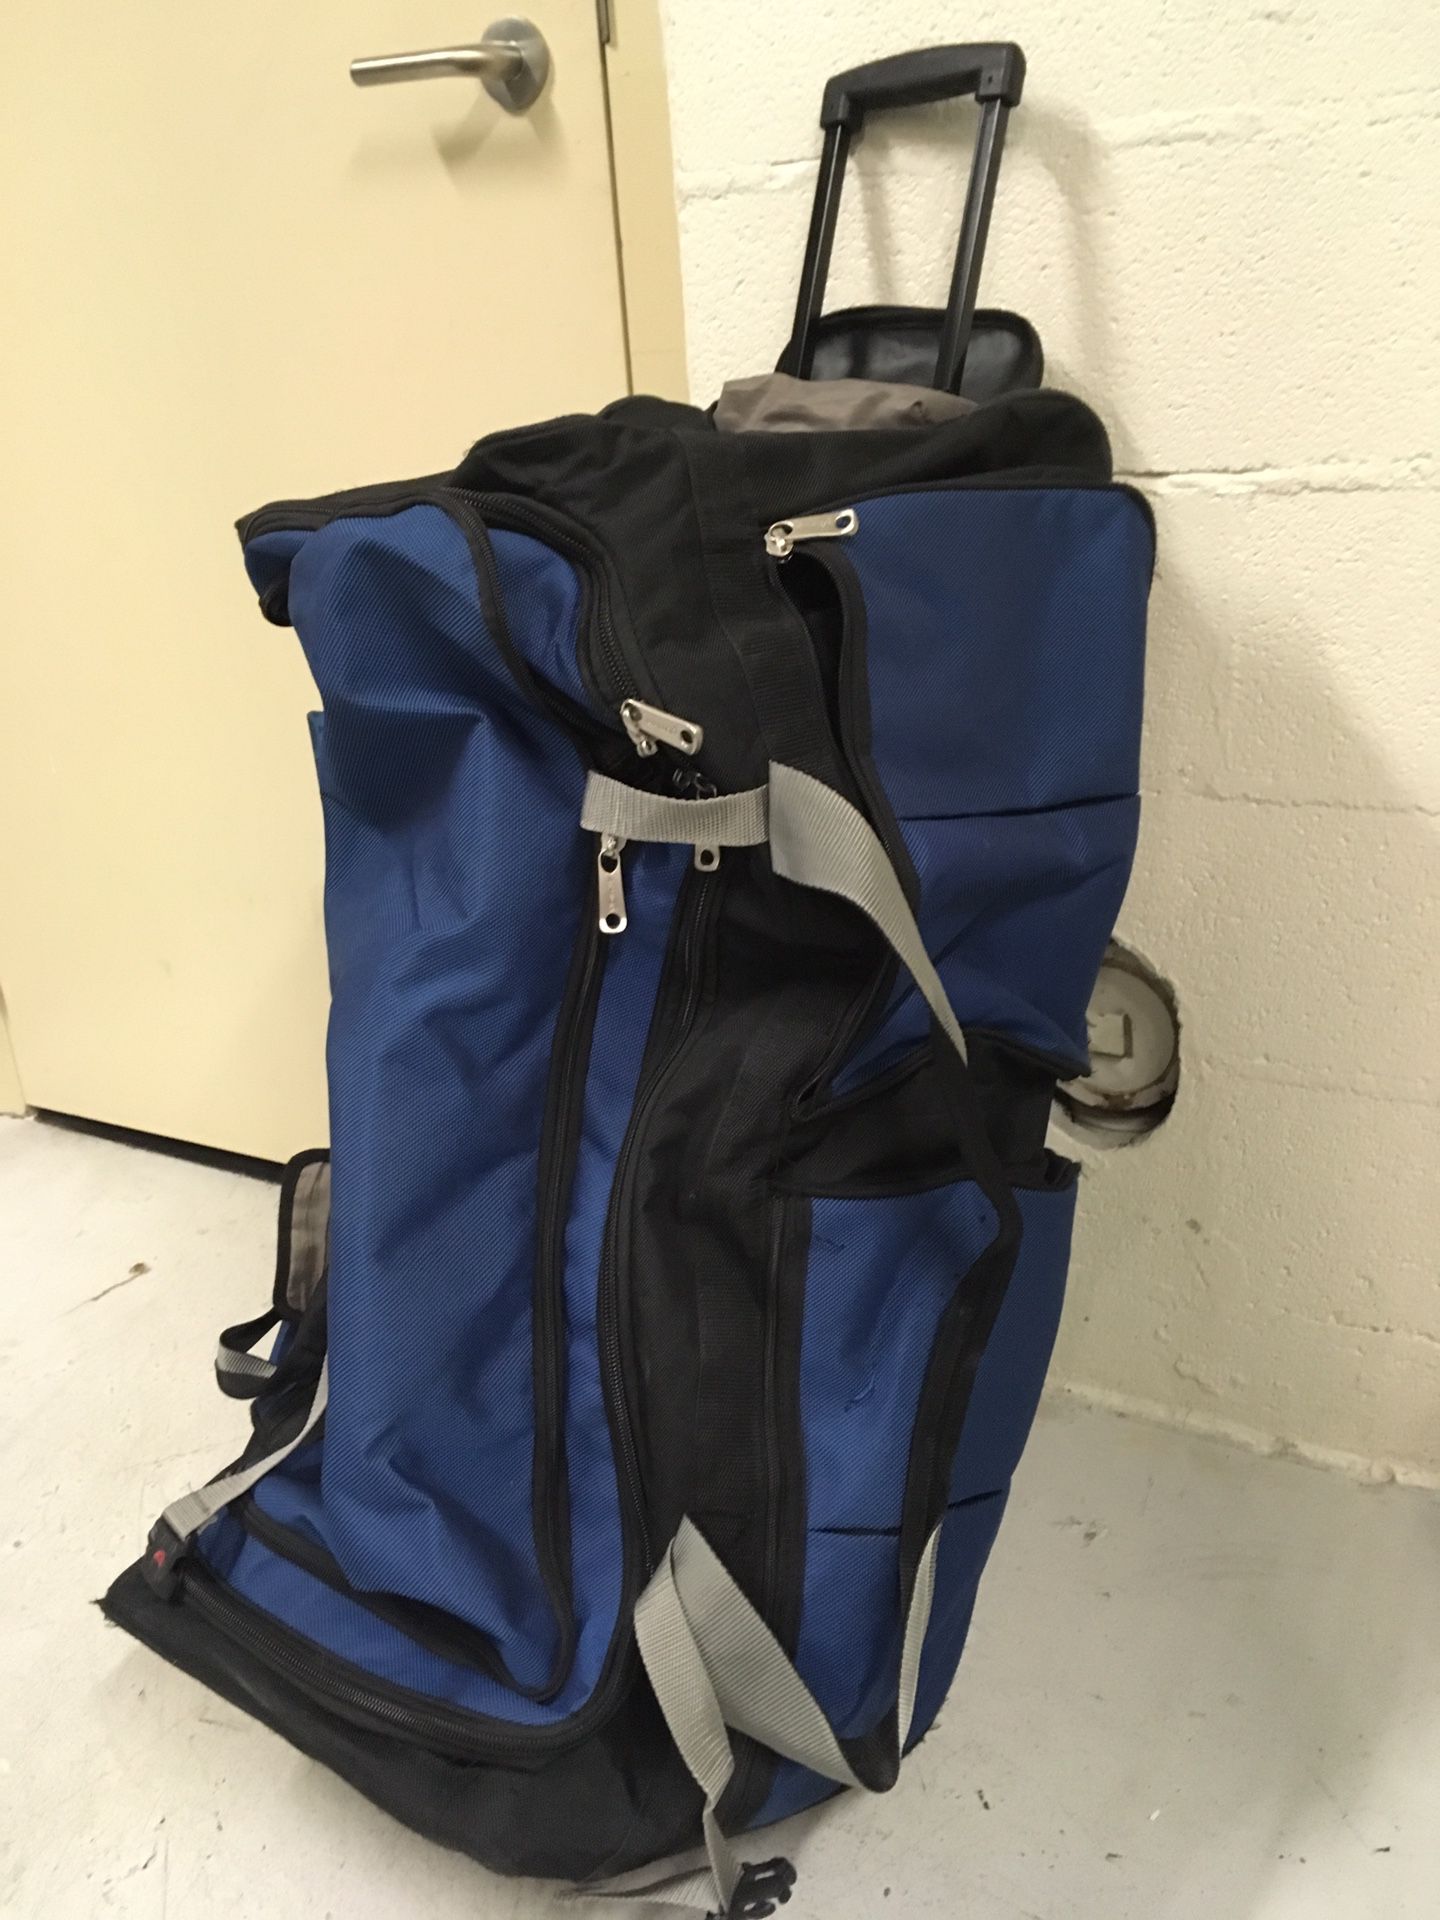 Duffle traveling bag with wheels- Atvalon